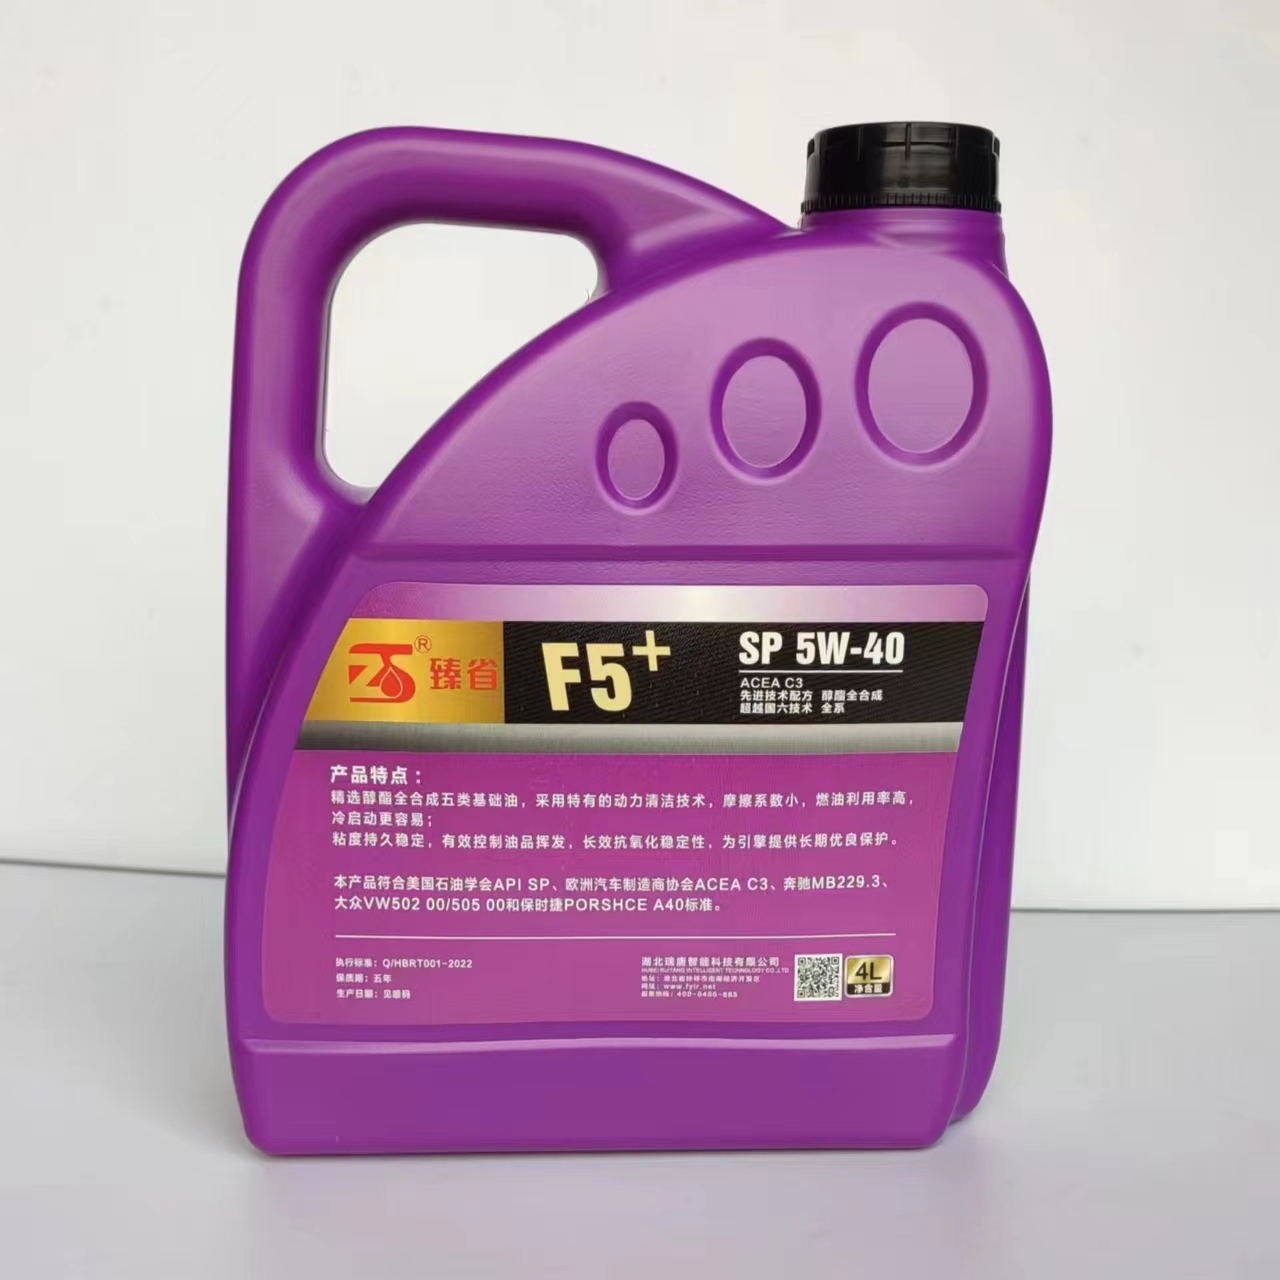 SP  5W-40(F2)酯类全合成润滑油 4L